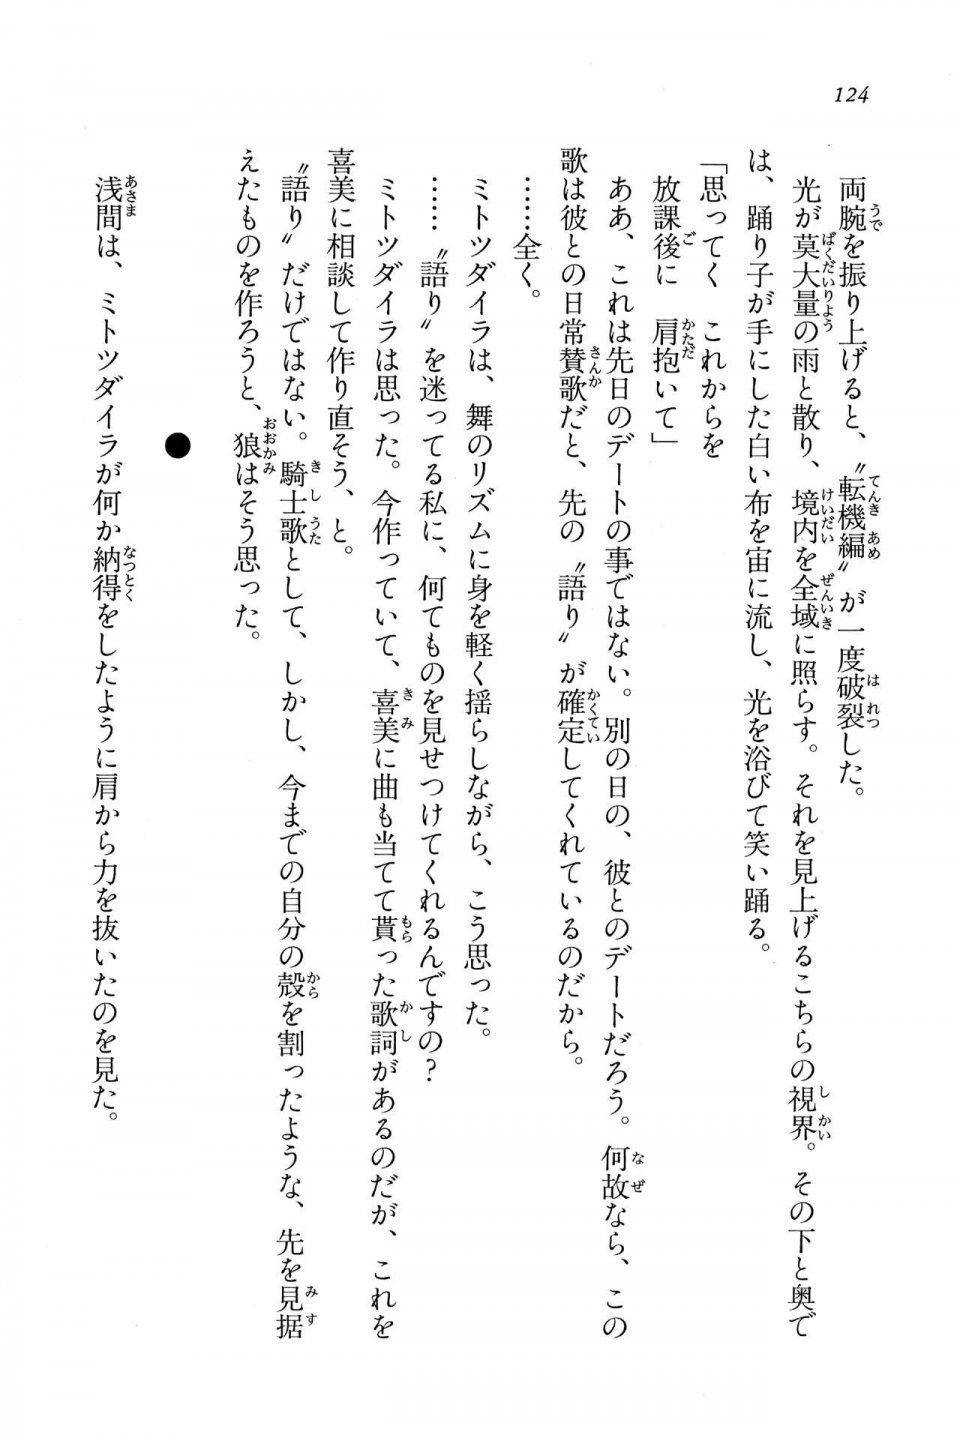 Kyoukai Senjou no Horizon BD Special Mininovel Vol 7(4A) - Photo #128